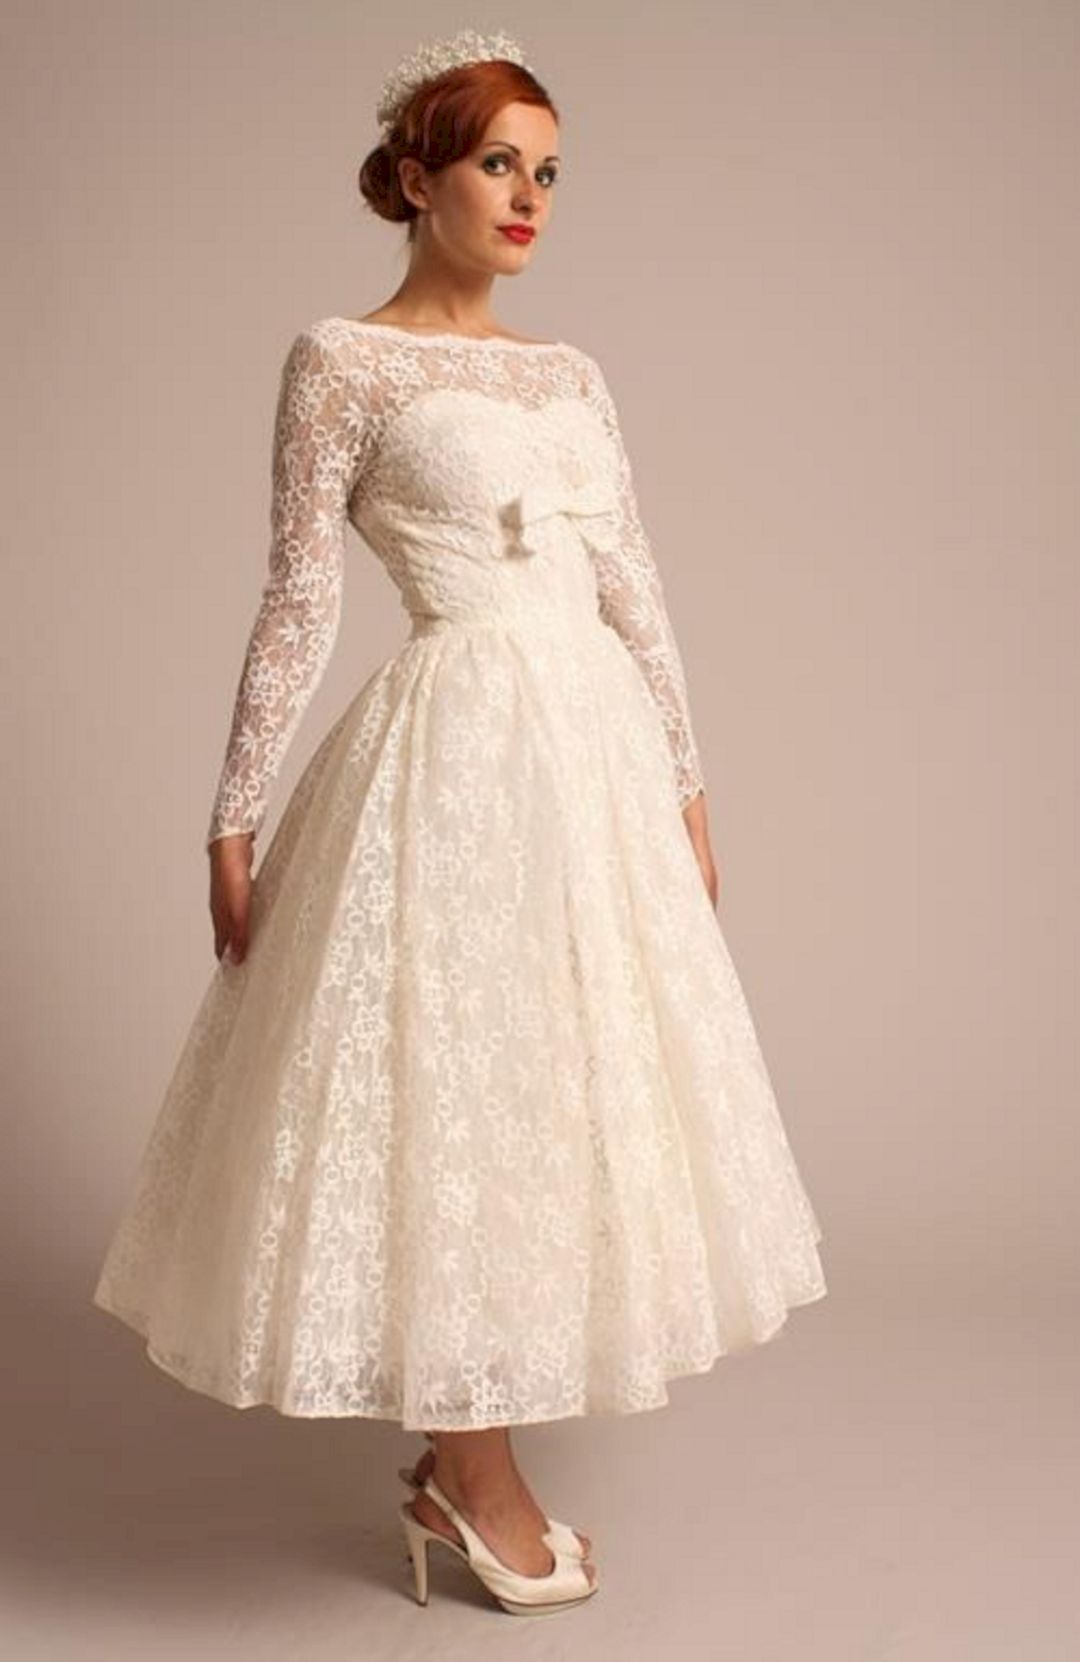 Vintage wedding gown from weddingdayz18